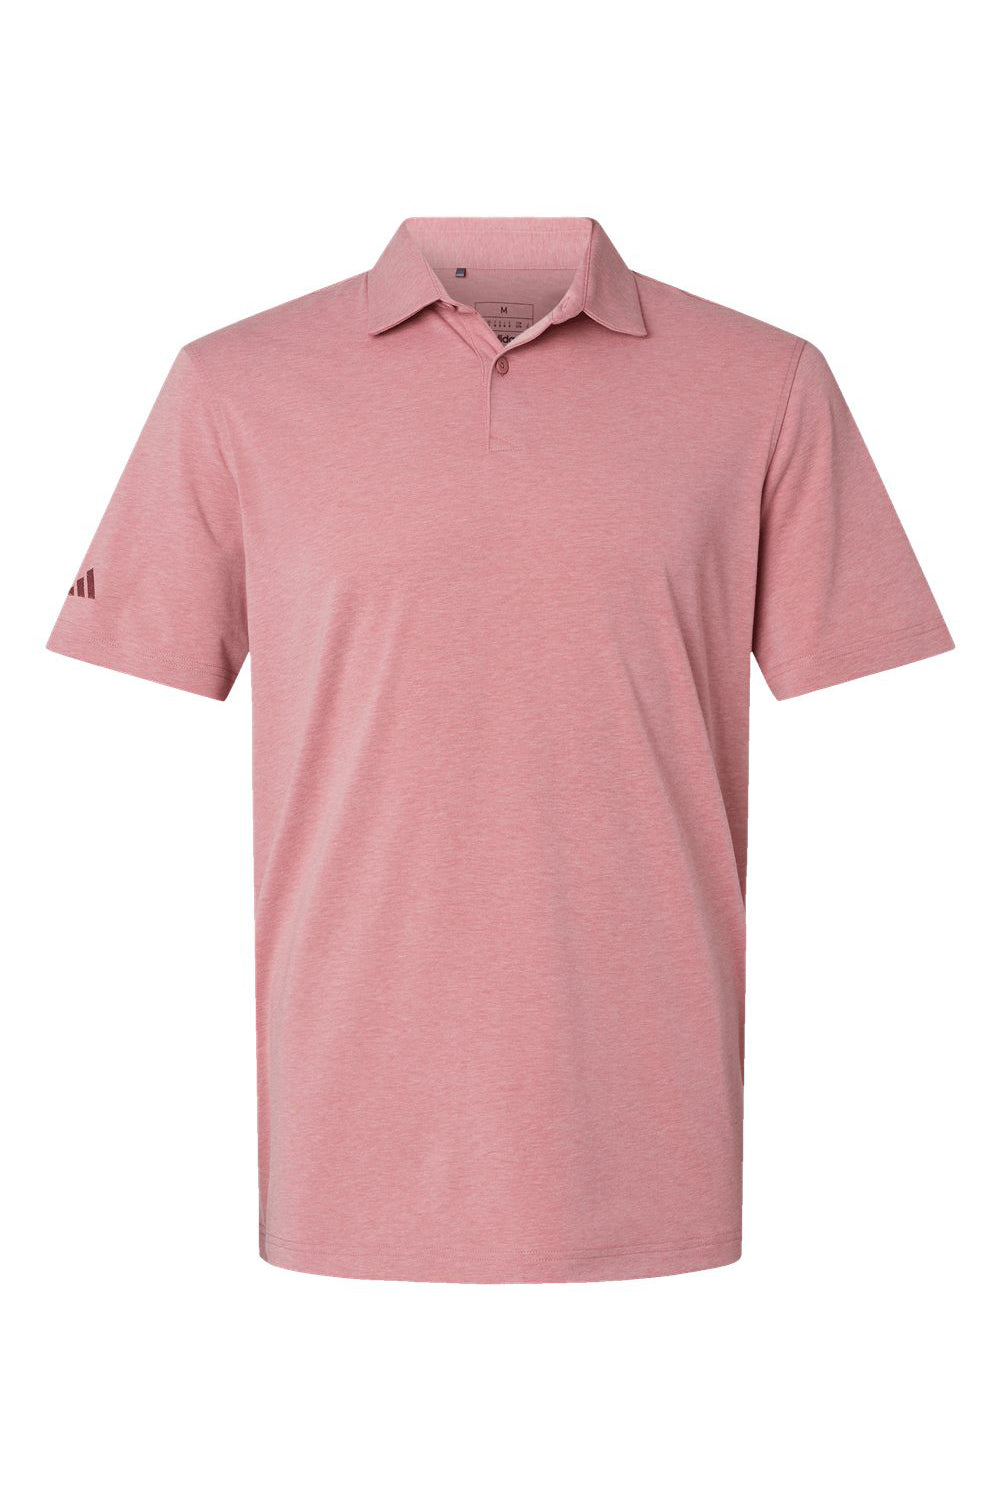 Adidas A590 Mens Short Sleeve Polo Shirt Pink Strata Melange Flat Front